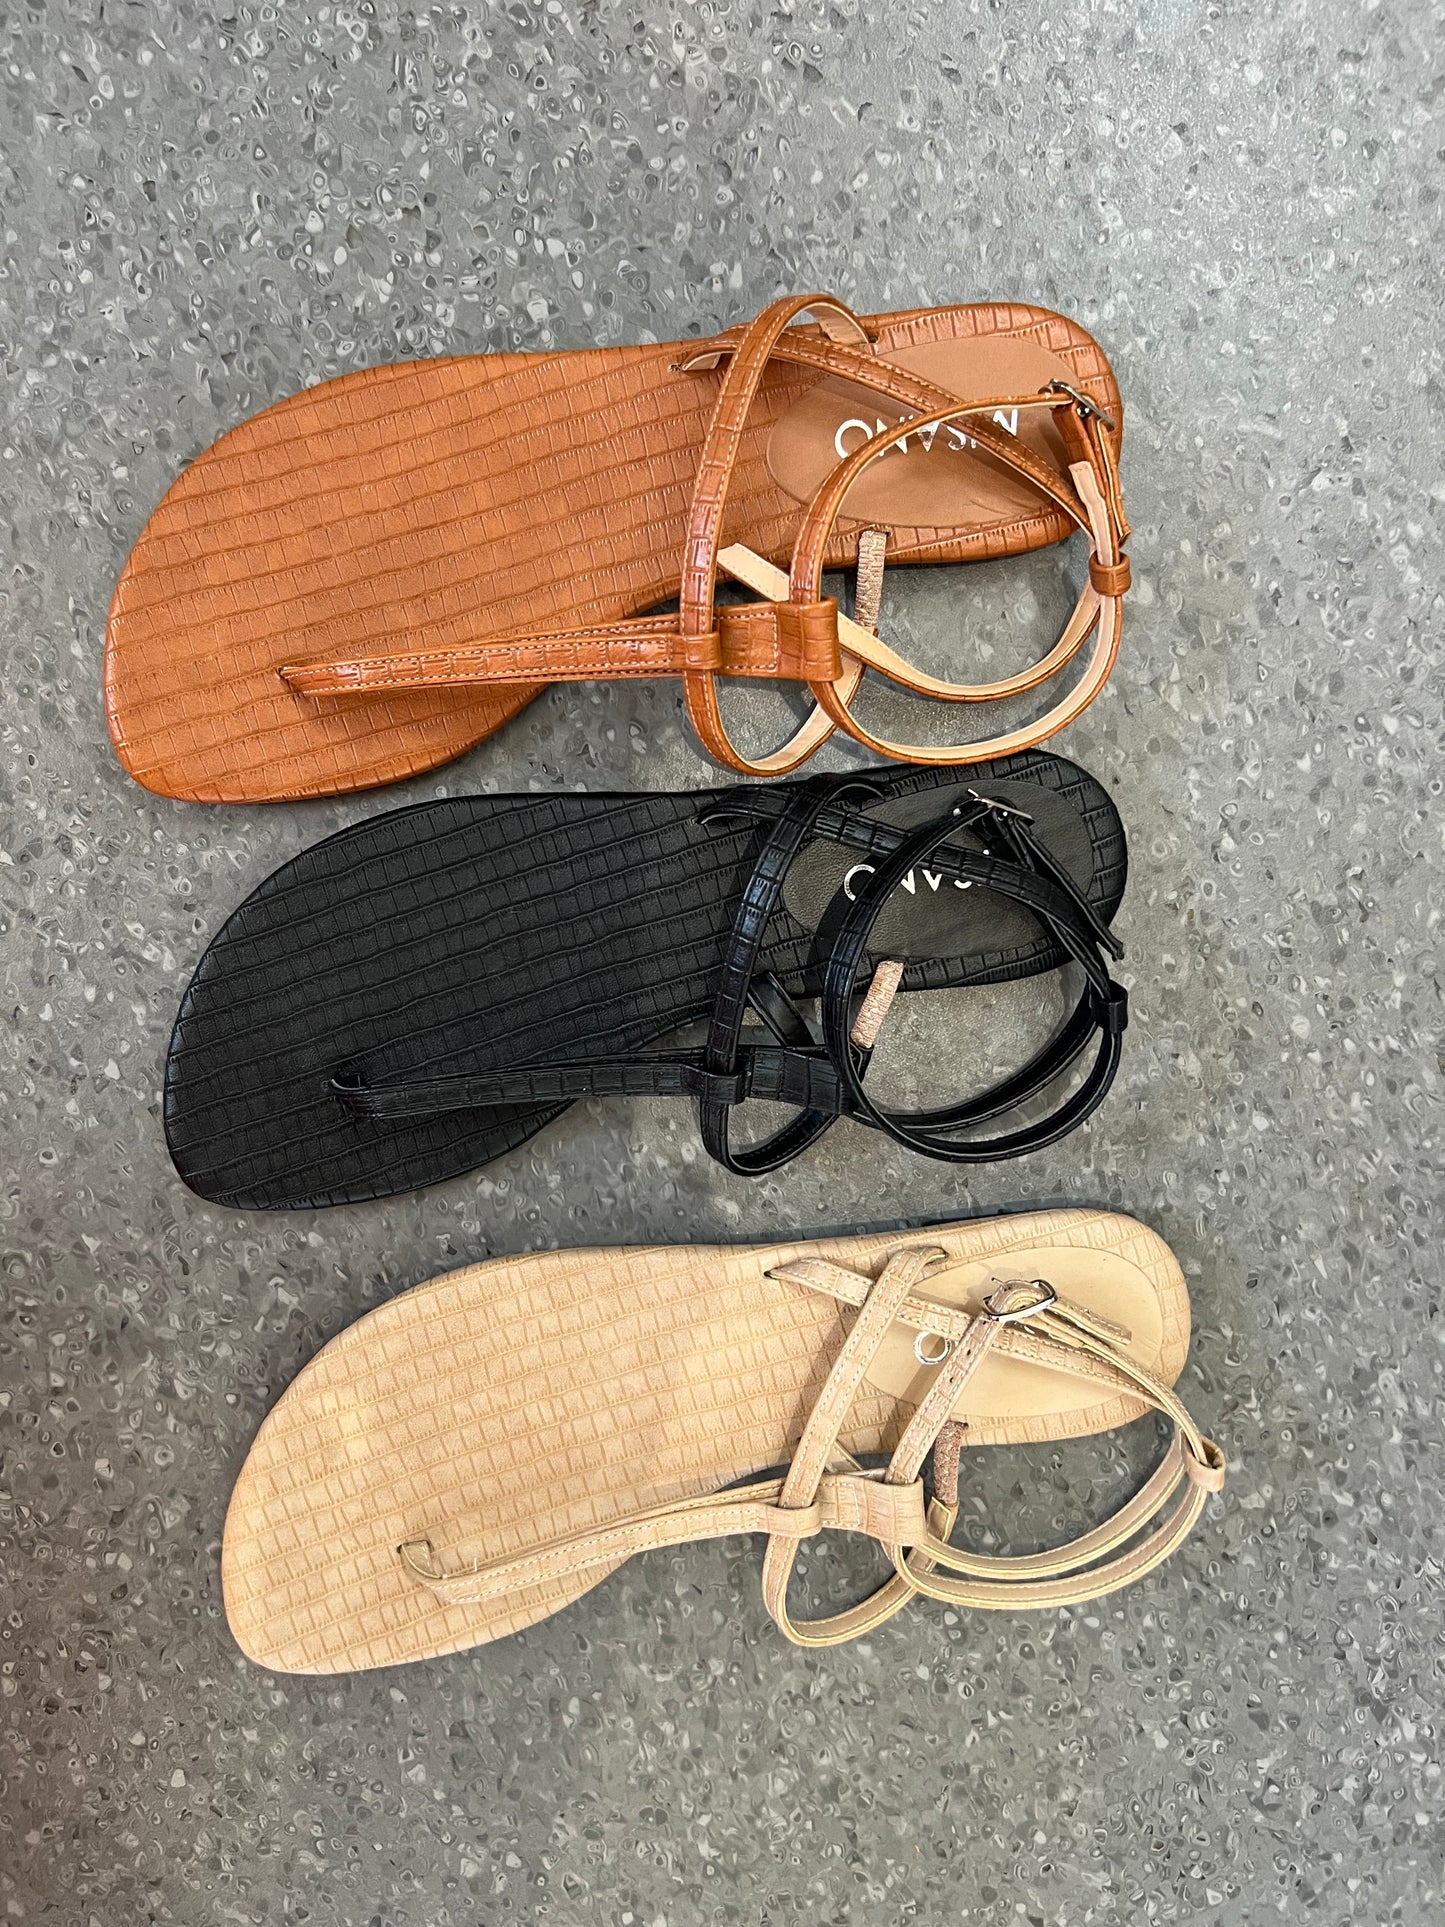 SHIZU LIZARD FINISH - MISANO - 36, 37, 38, 39, 40, 41, 42, BEIGE, BLACK, TAN, womens footwear - Stomp Shoes Darwin